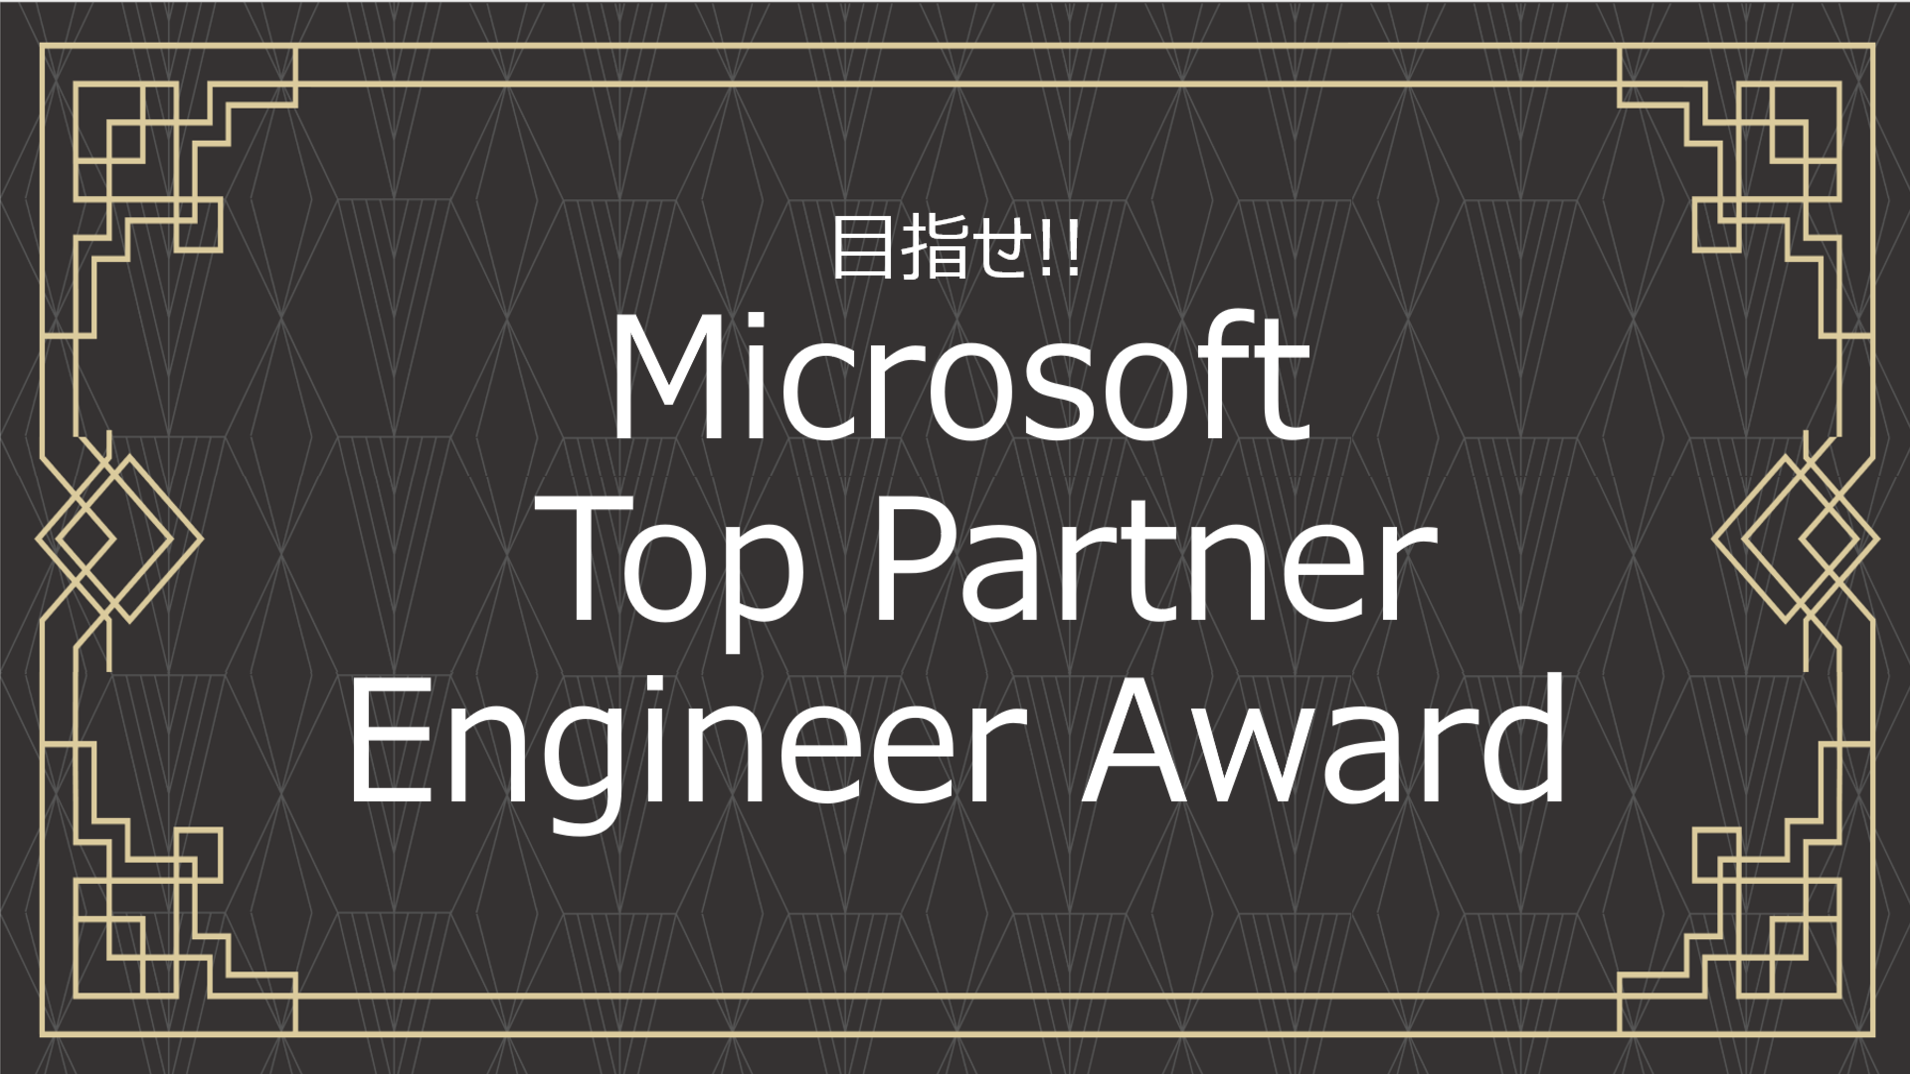 azblob://2023/03/09/eyecatch/2023-03-10-microsoft-top-partner-engineer-award-000.png